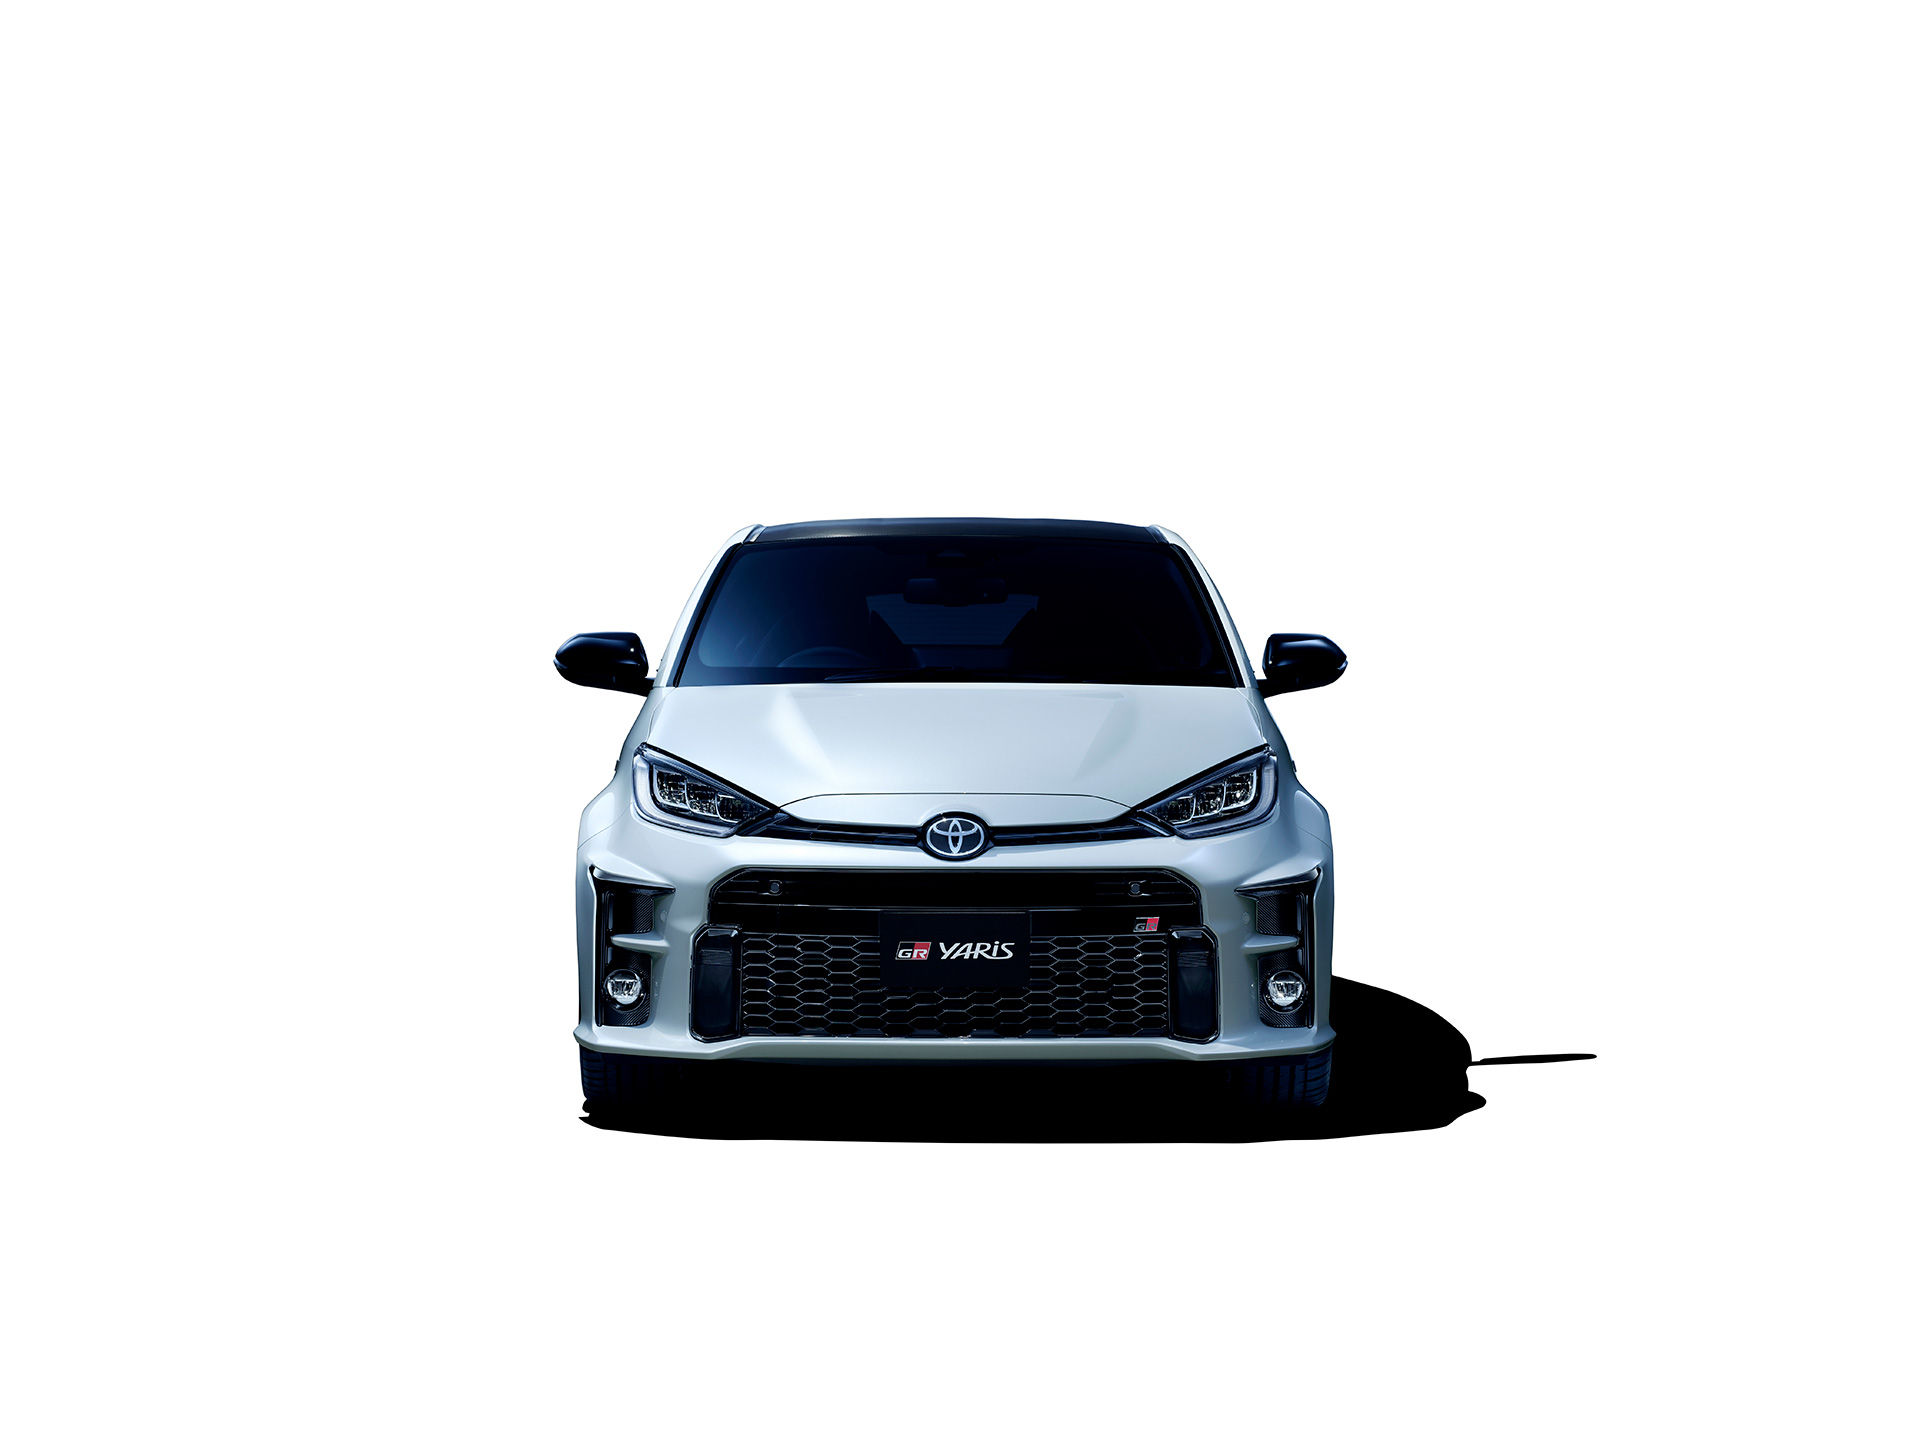 GRヤリス | トヨタ自動車株式会社 公式企業サイト